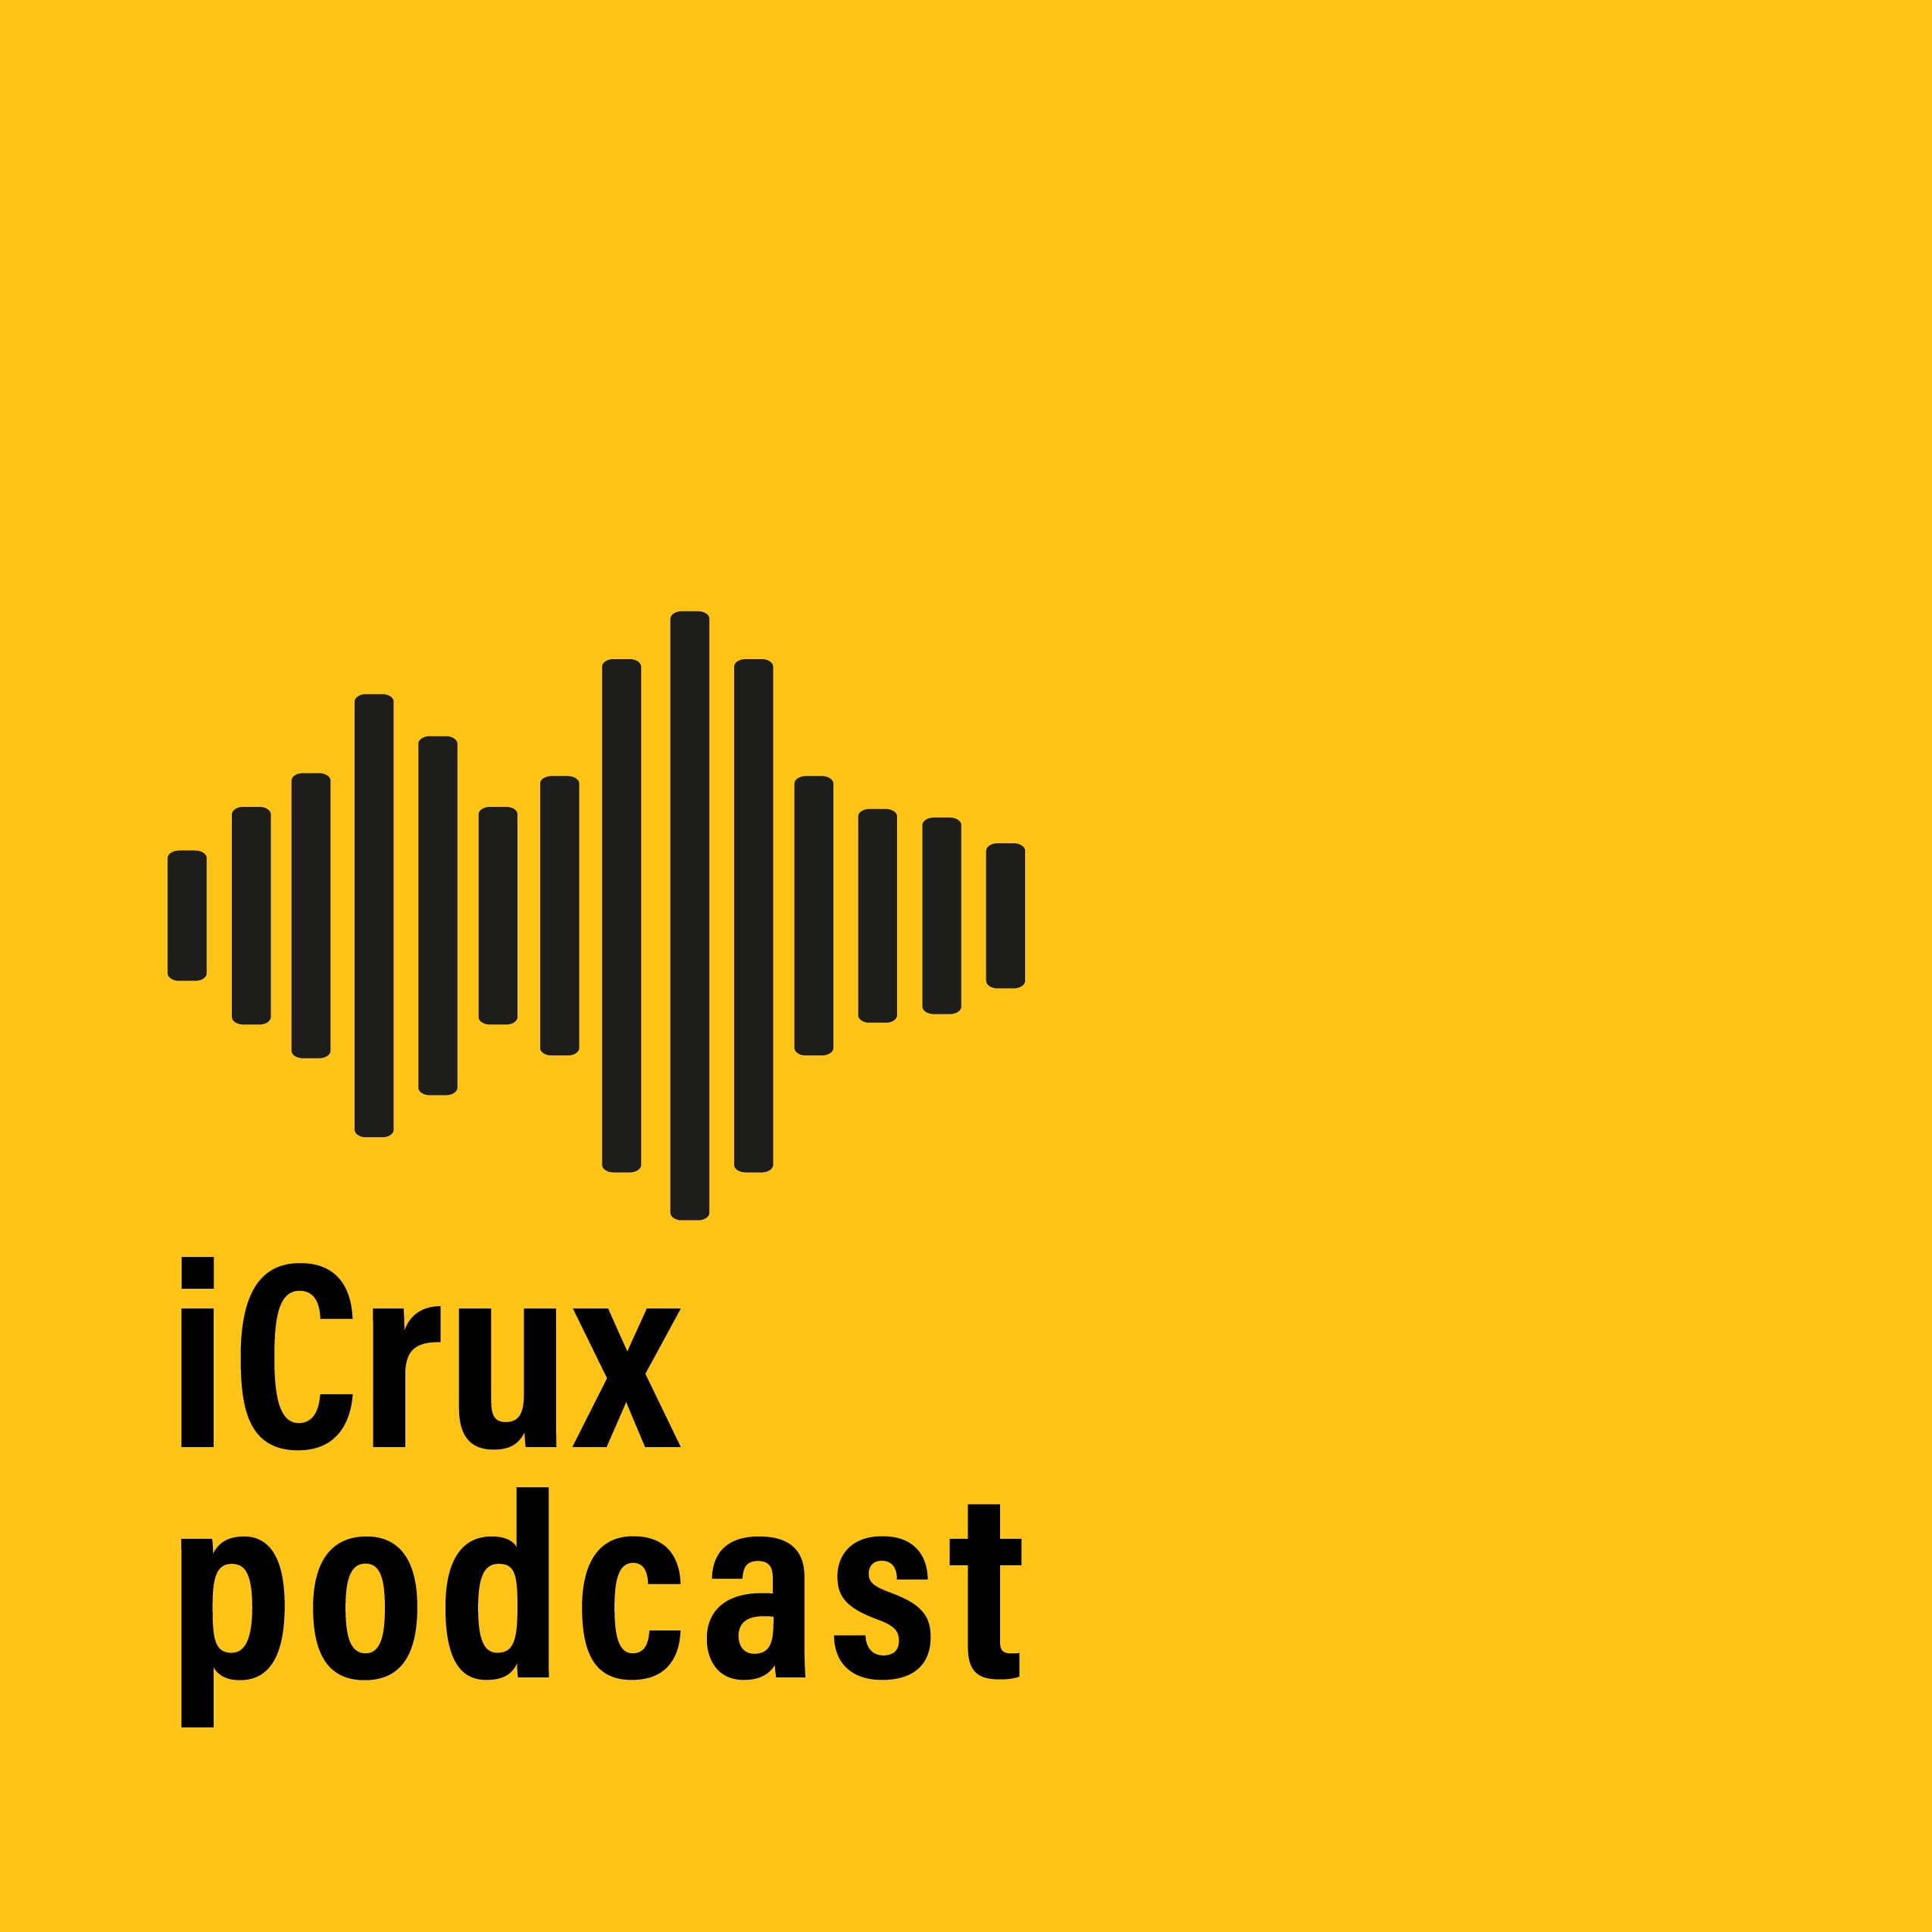 iCrux Podcast